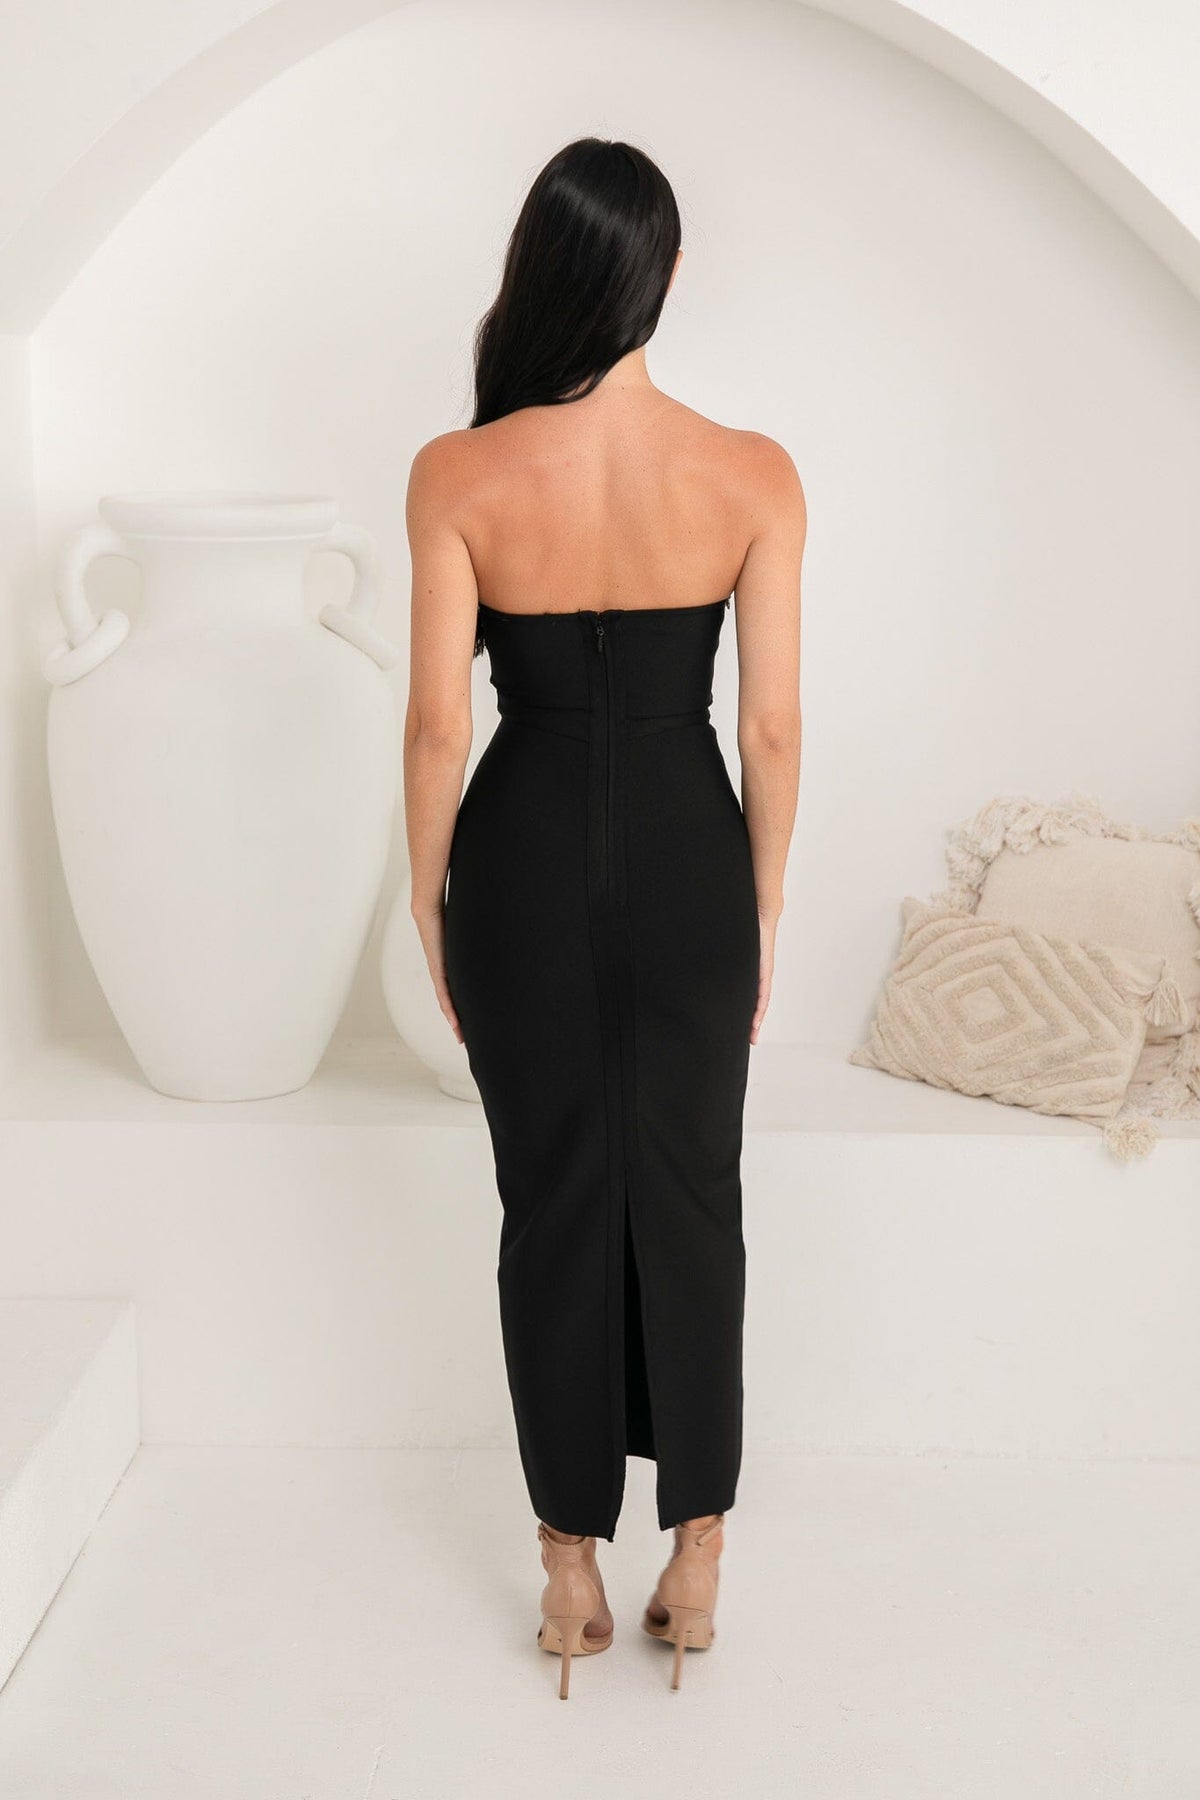 Back Image of Black Strapless Bandage Maxi Dress with Clear Stones Embellishment and Back Split